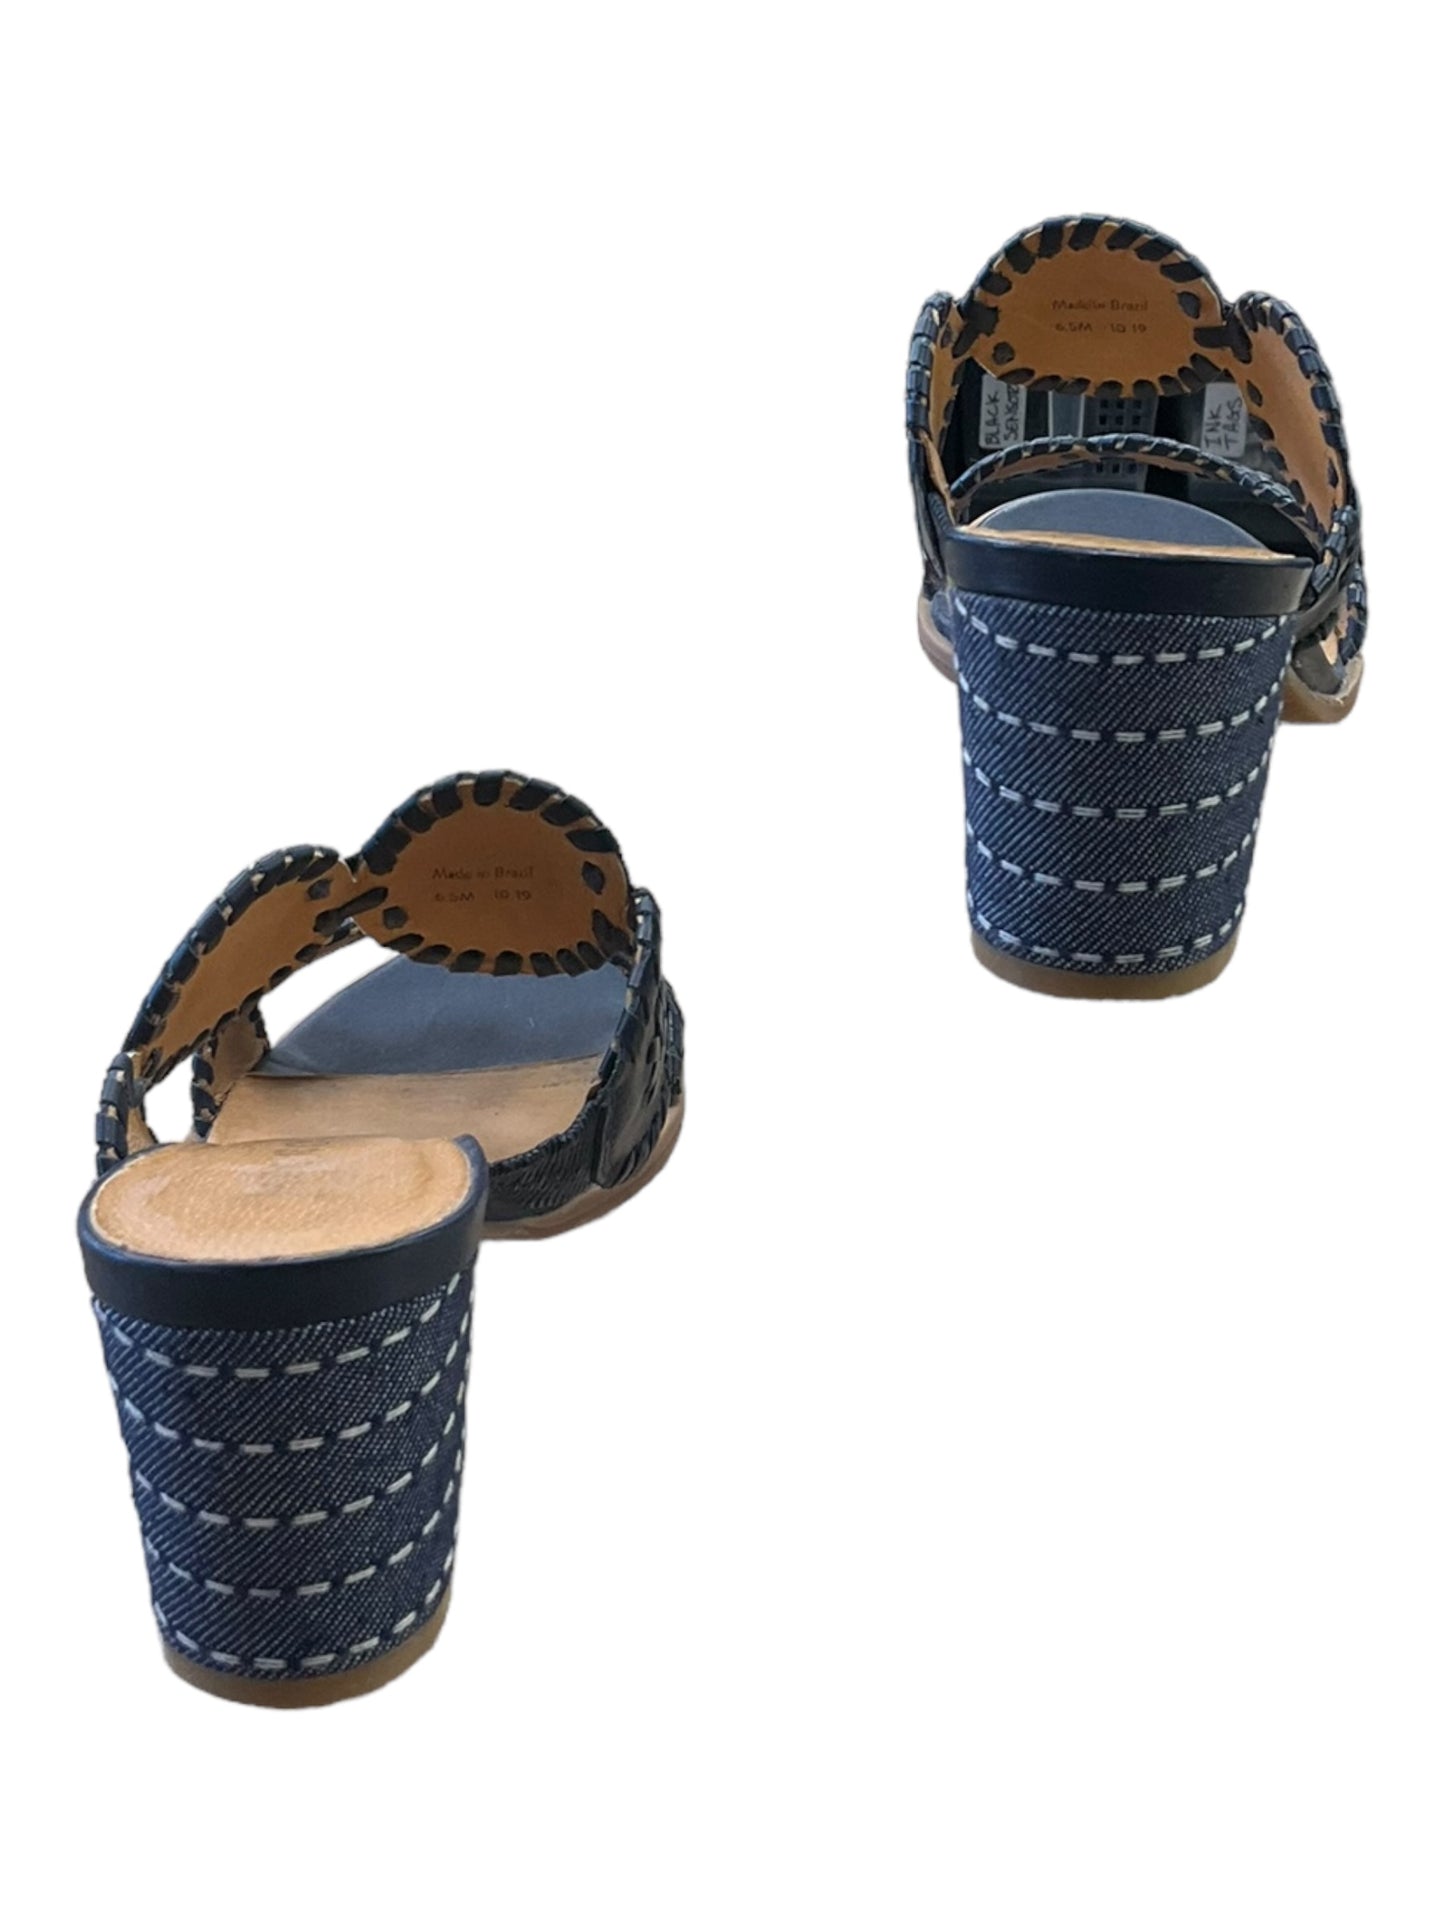 Sandals Heels Block By Jack Rogers  Size: 6.5